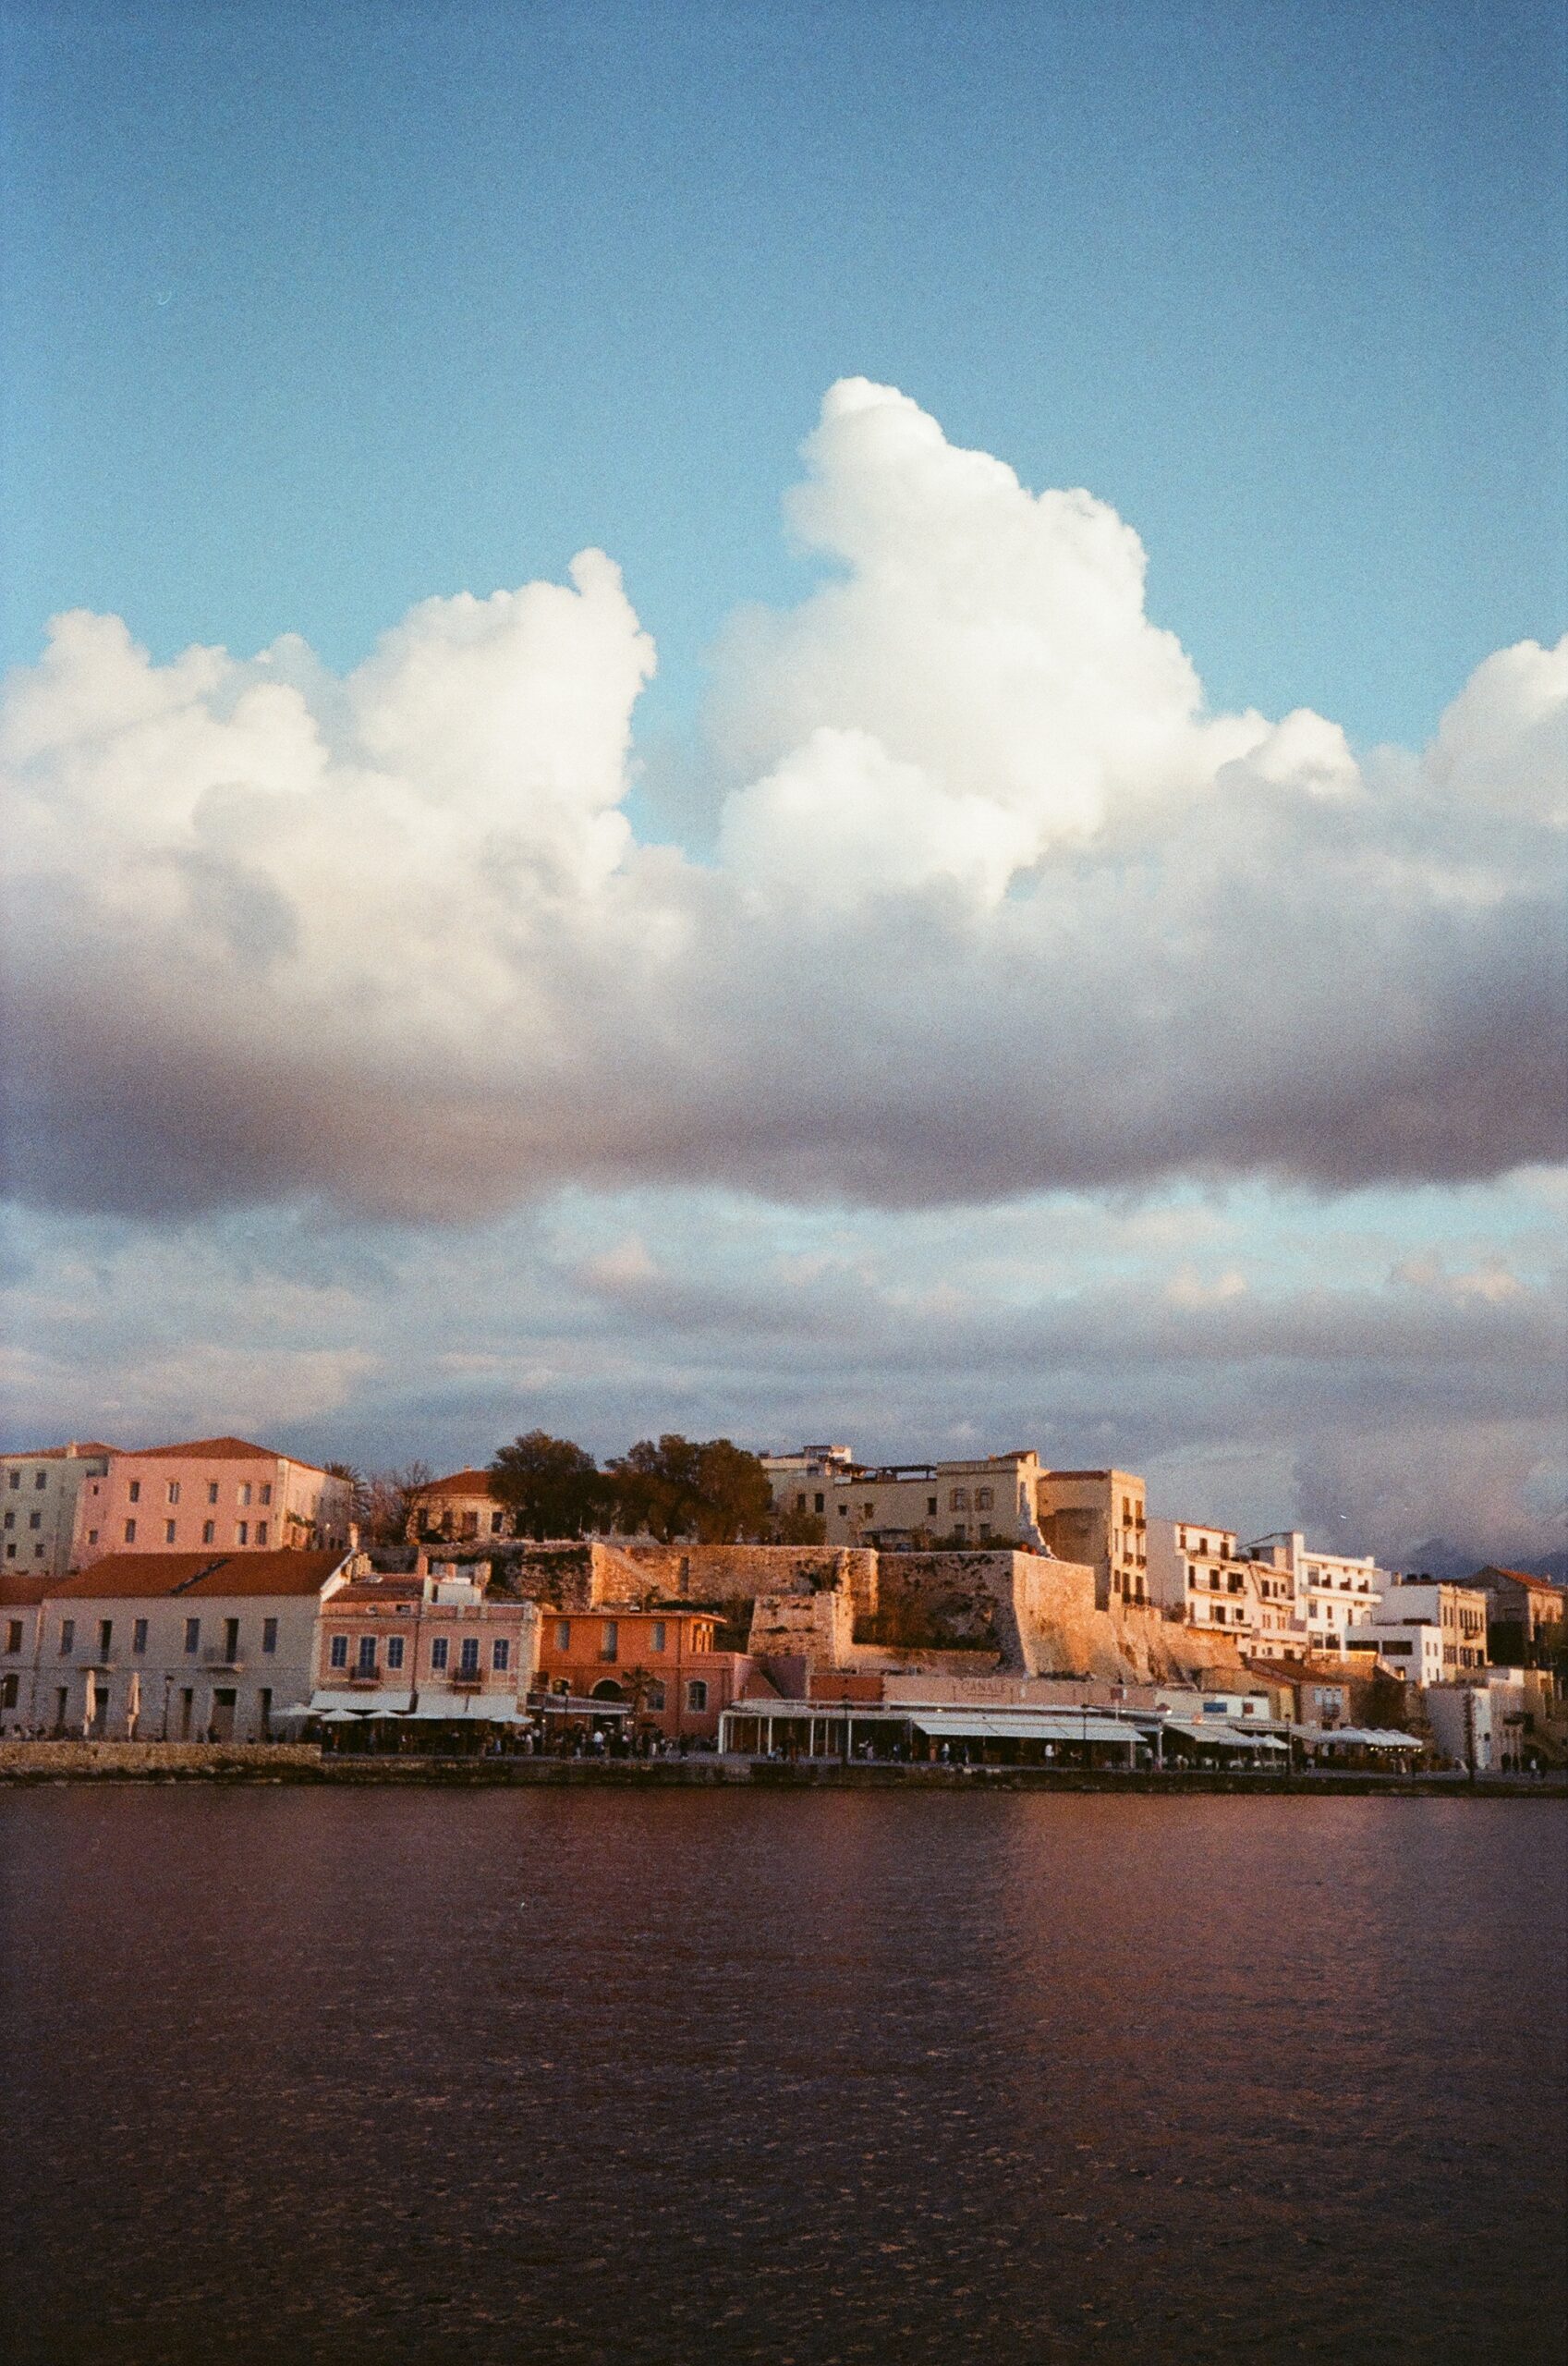 Chania Old Town, Crete island